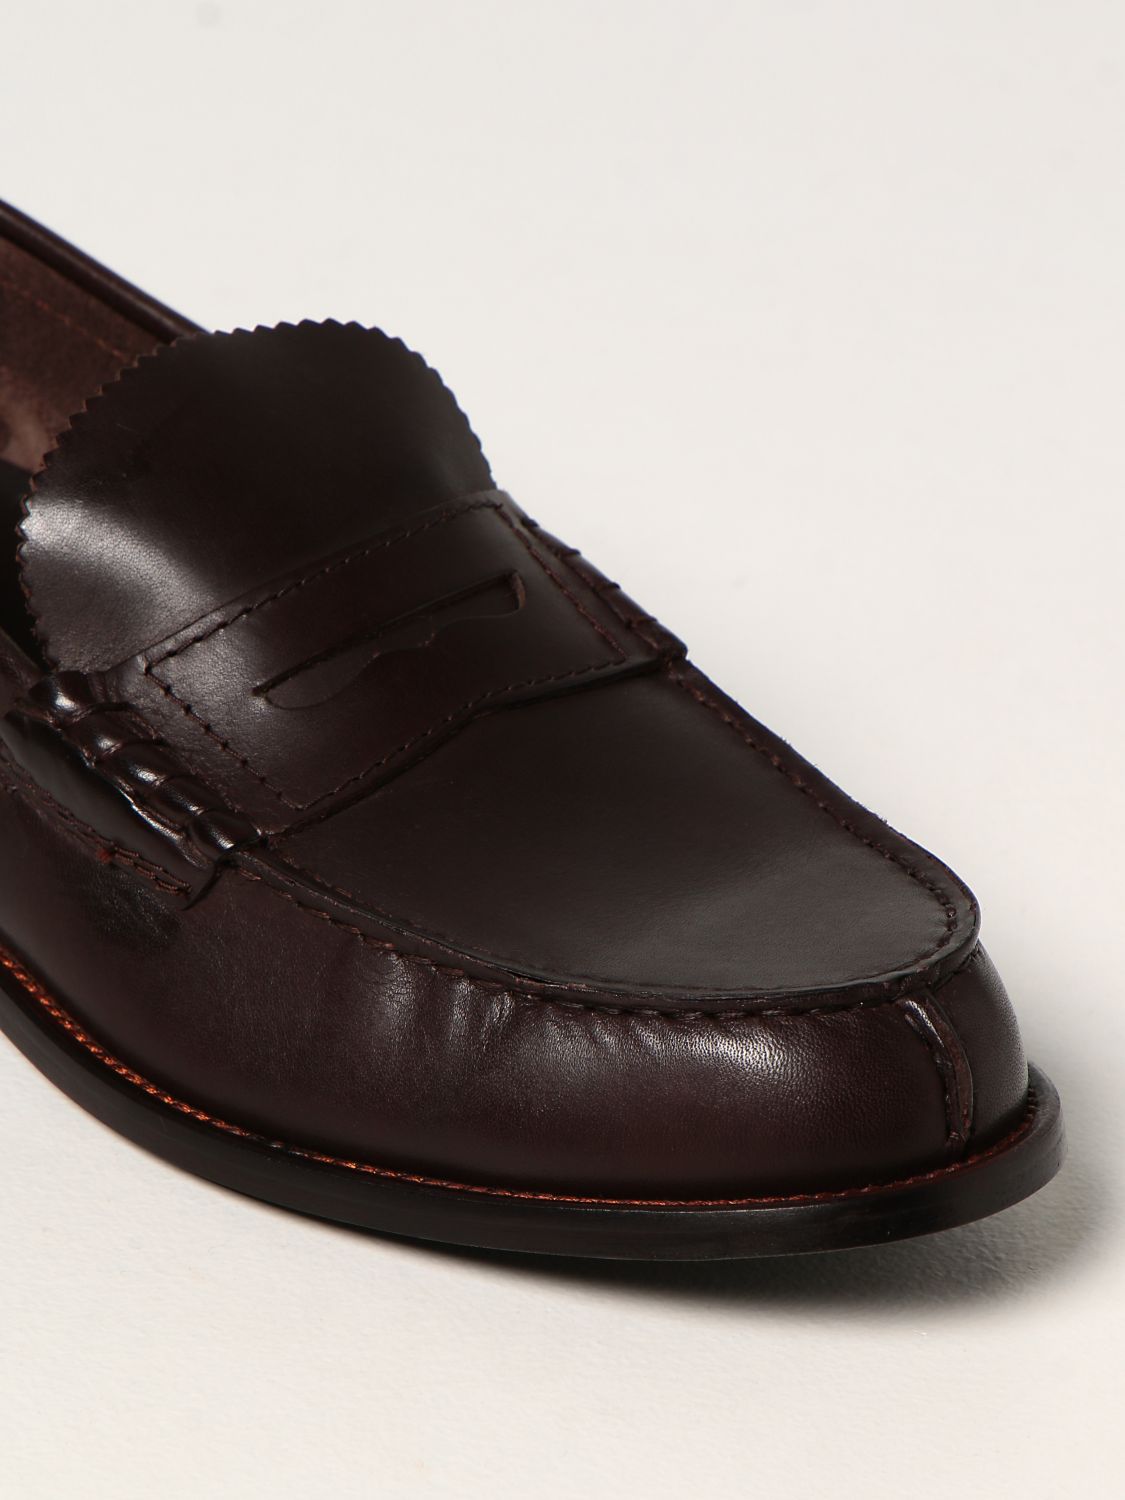 Mocassins Clarks: Chaussures homme Clarks Originals brun 4